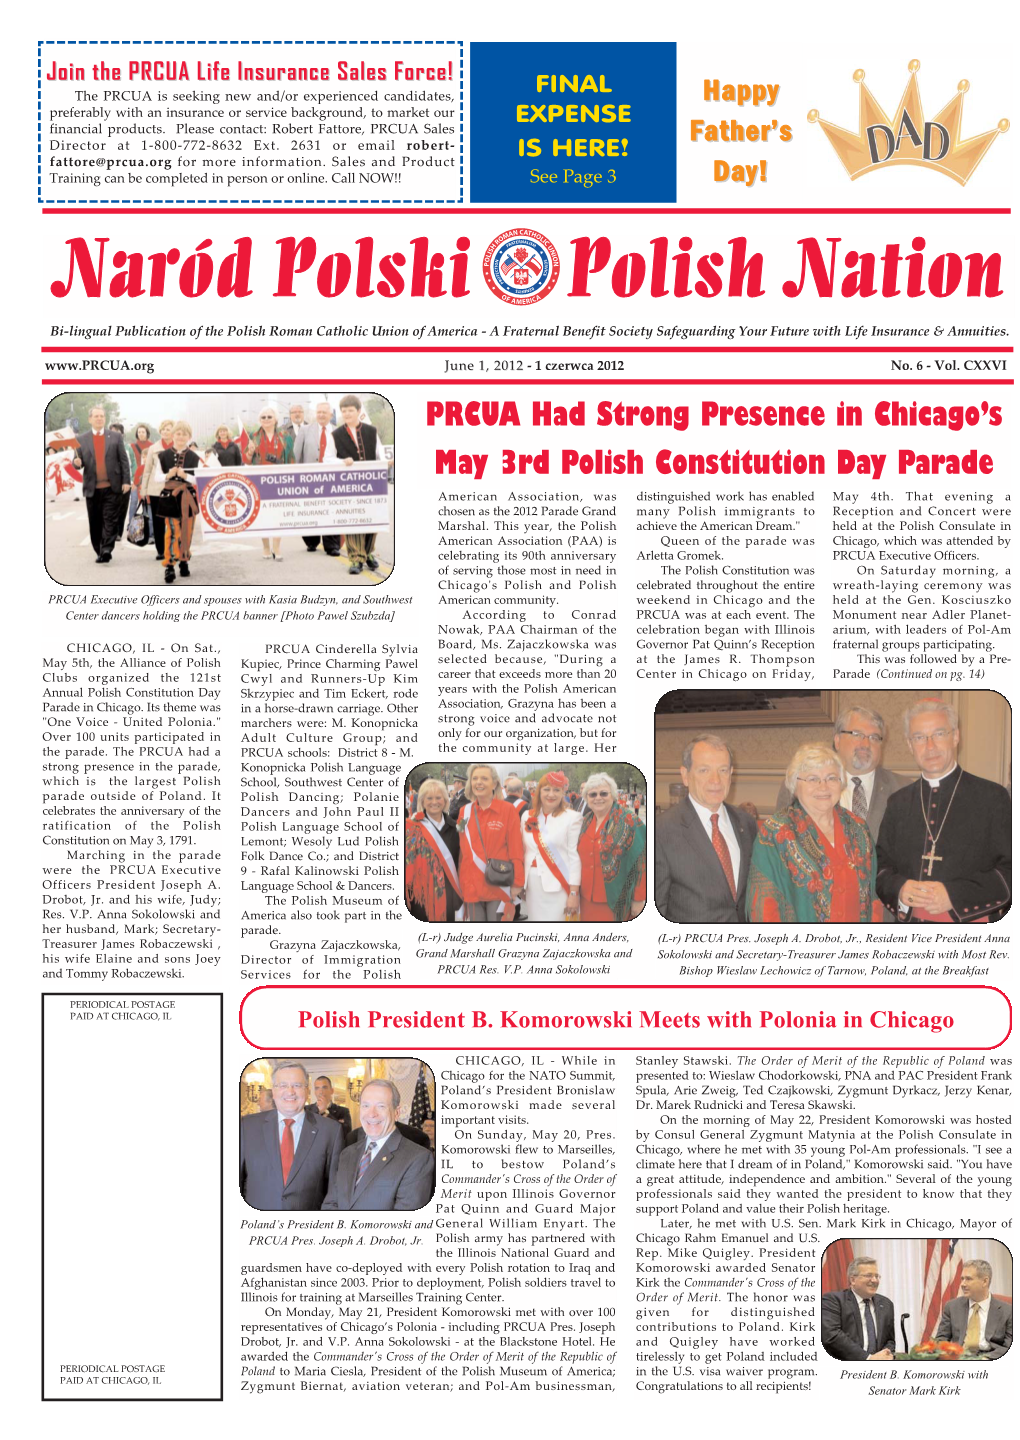 Polish President B. Komorowski Meets with Polonia in Chicago